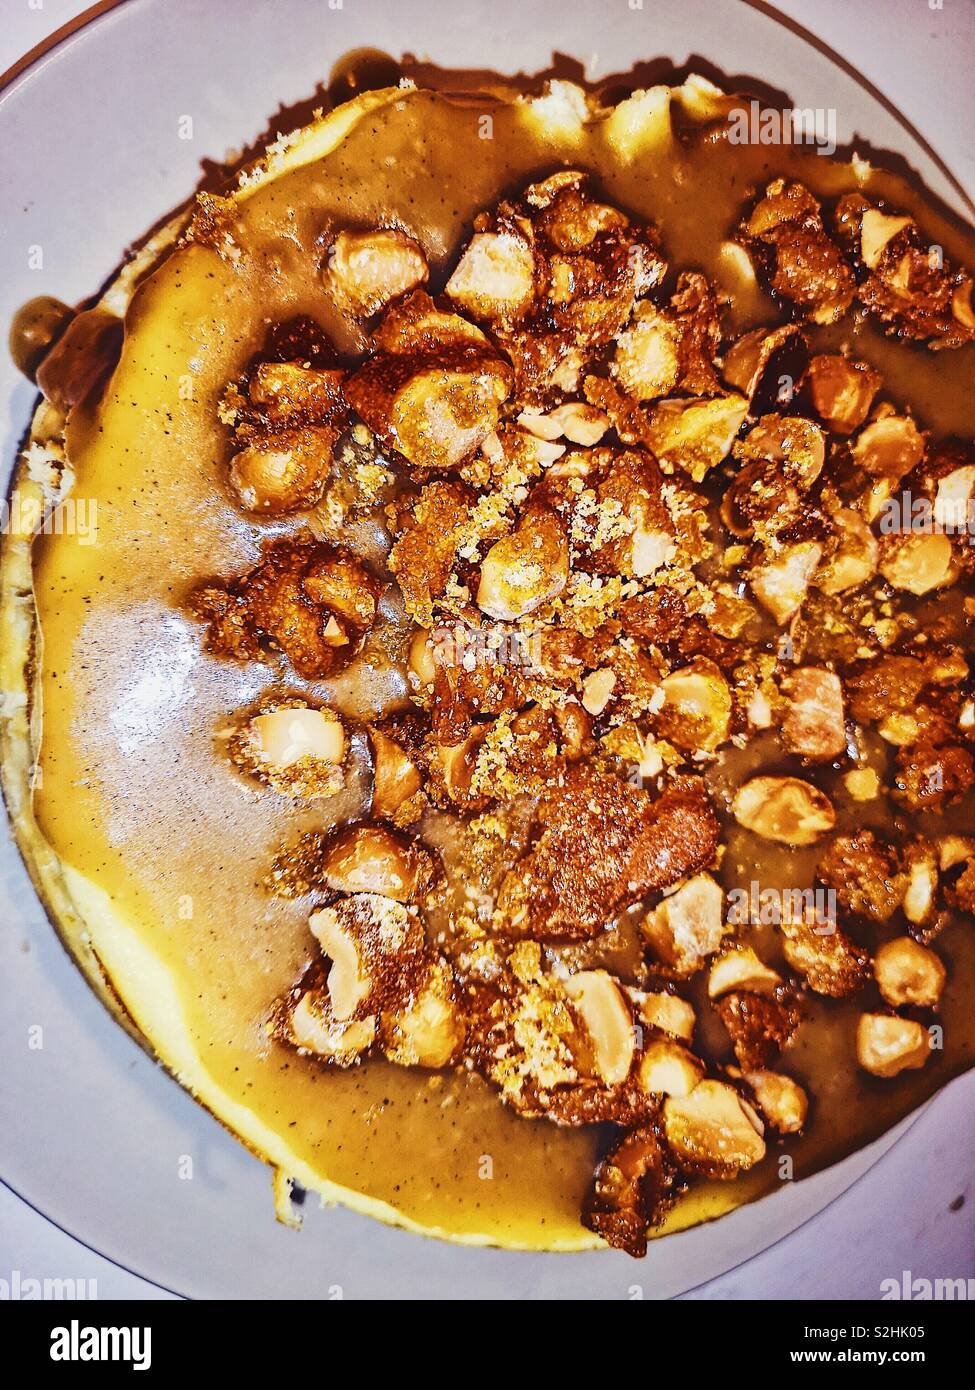 Homemade Macadamia nut and caramel cheesecake Stock Photo